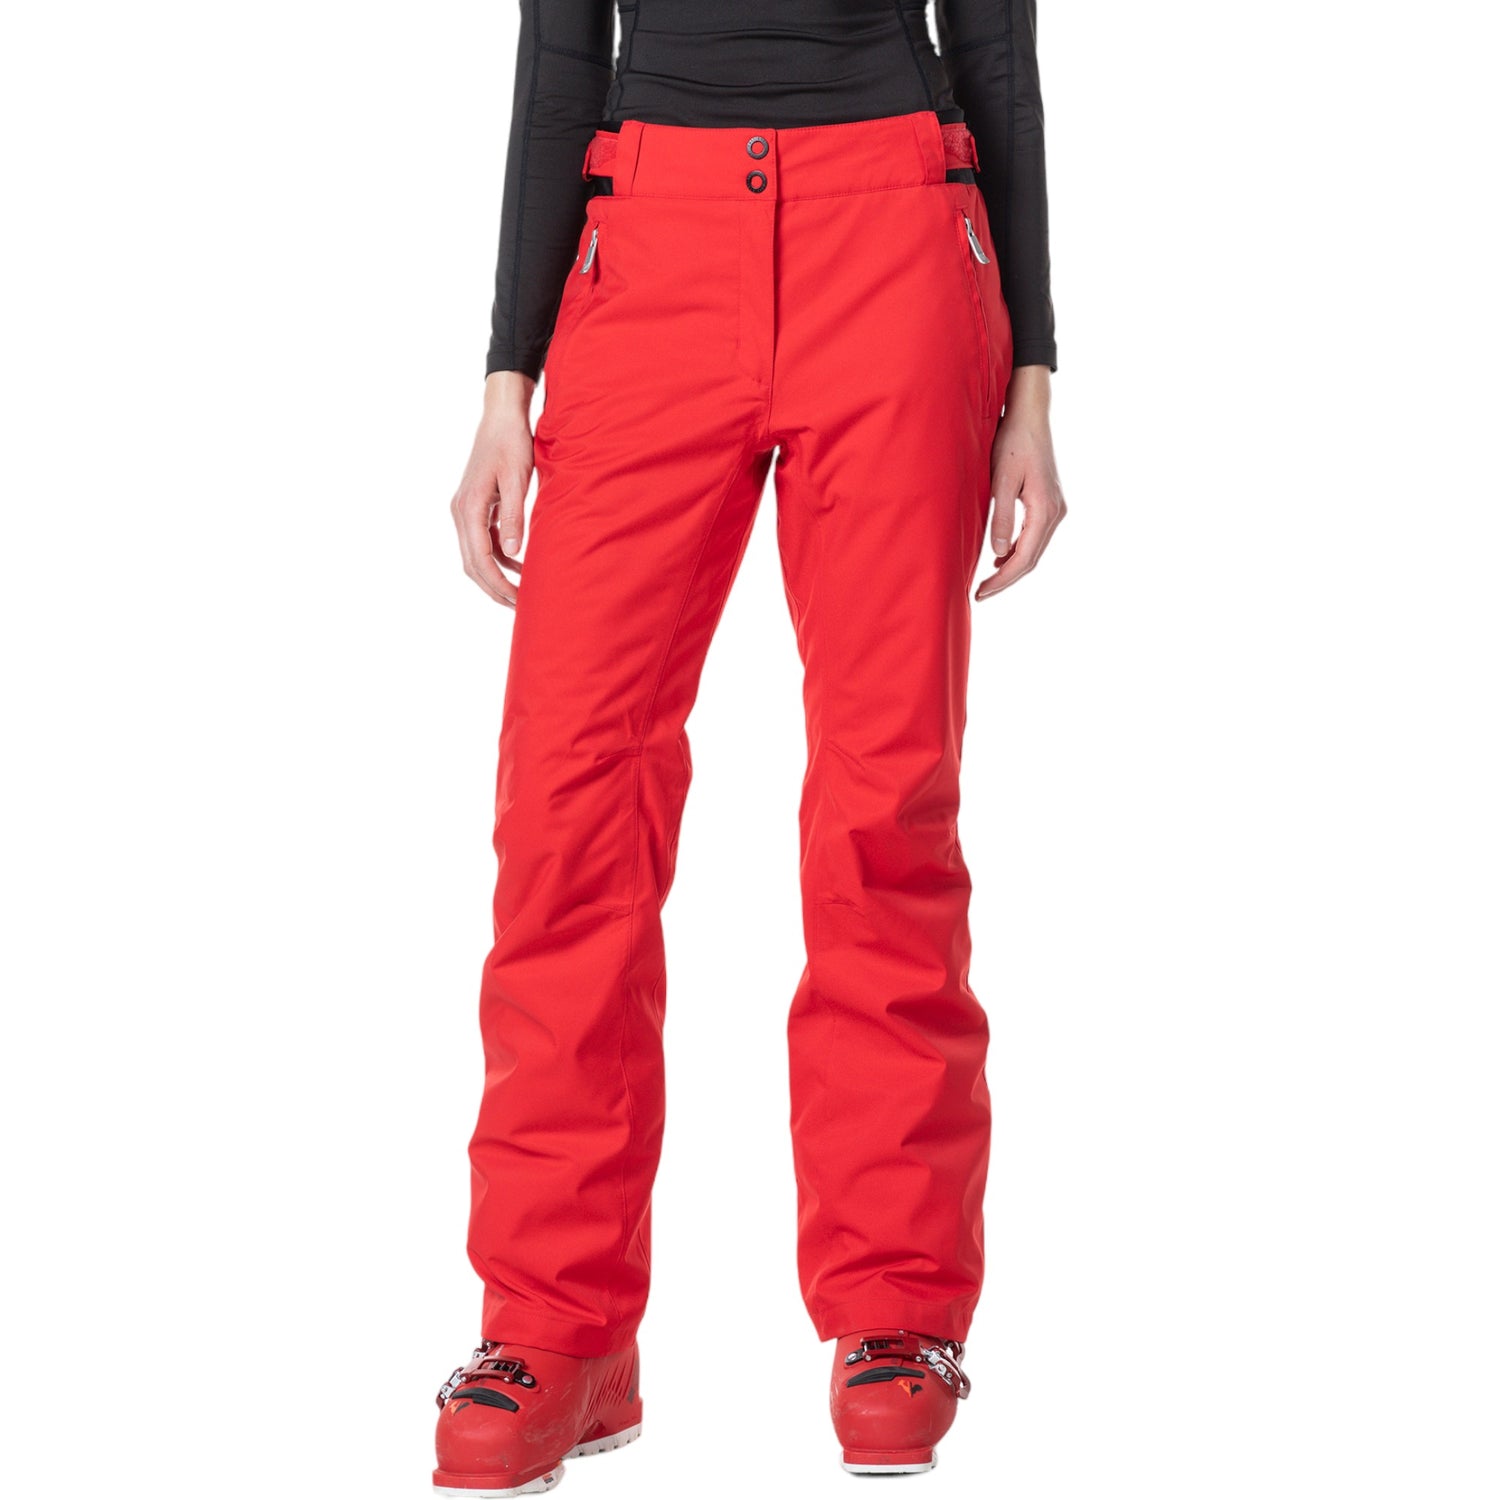 ROSSIGNOL RAPIDE ski pants for women Color Black Size (Clothing